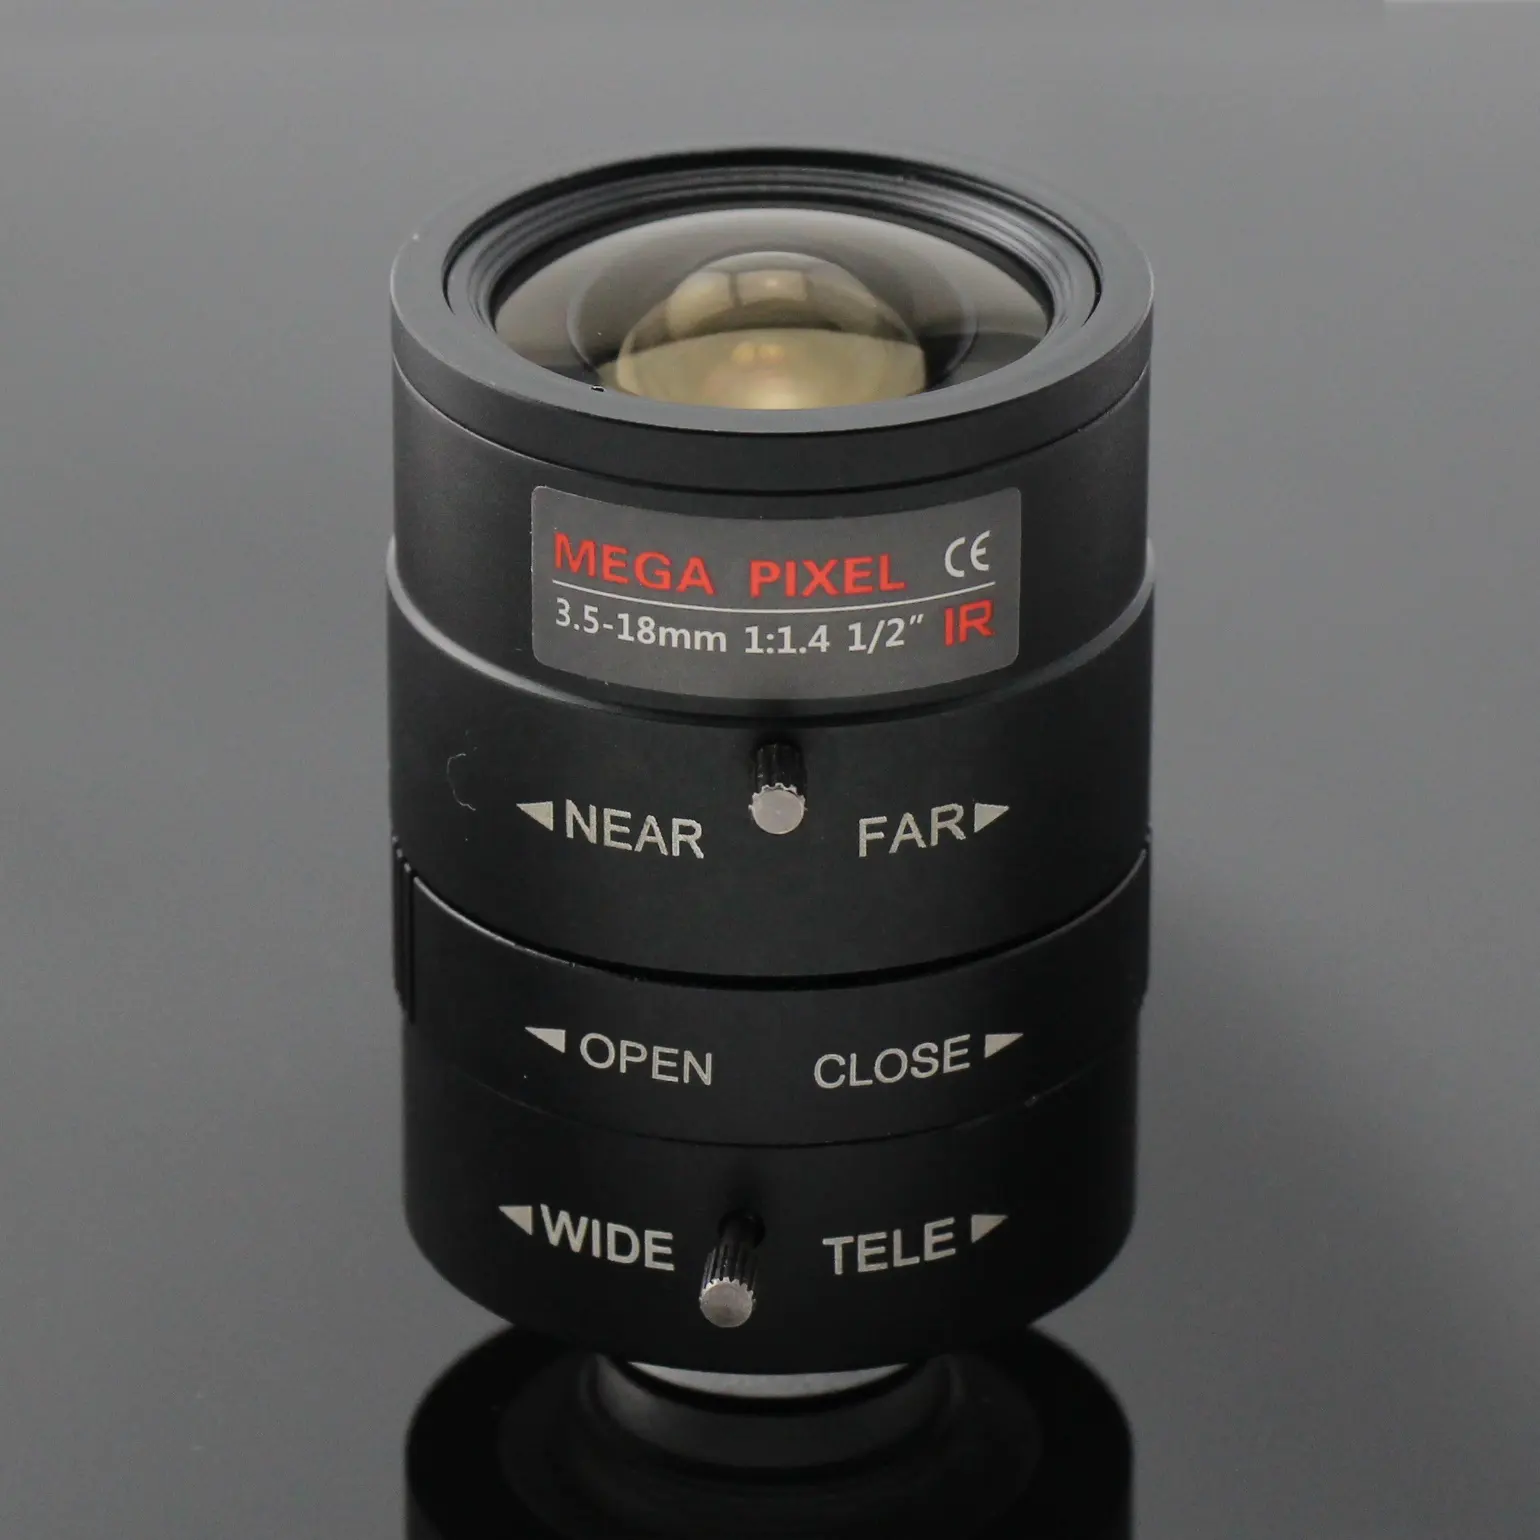 cctv lens 2021 new lens 3.5-18mm 3 Megapixel Manual Iris Lens with 1/2" format,C Mount